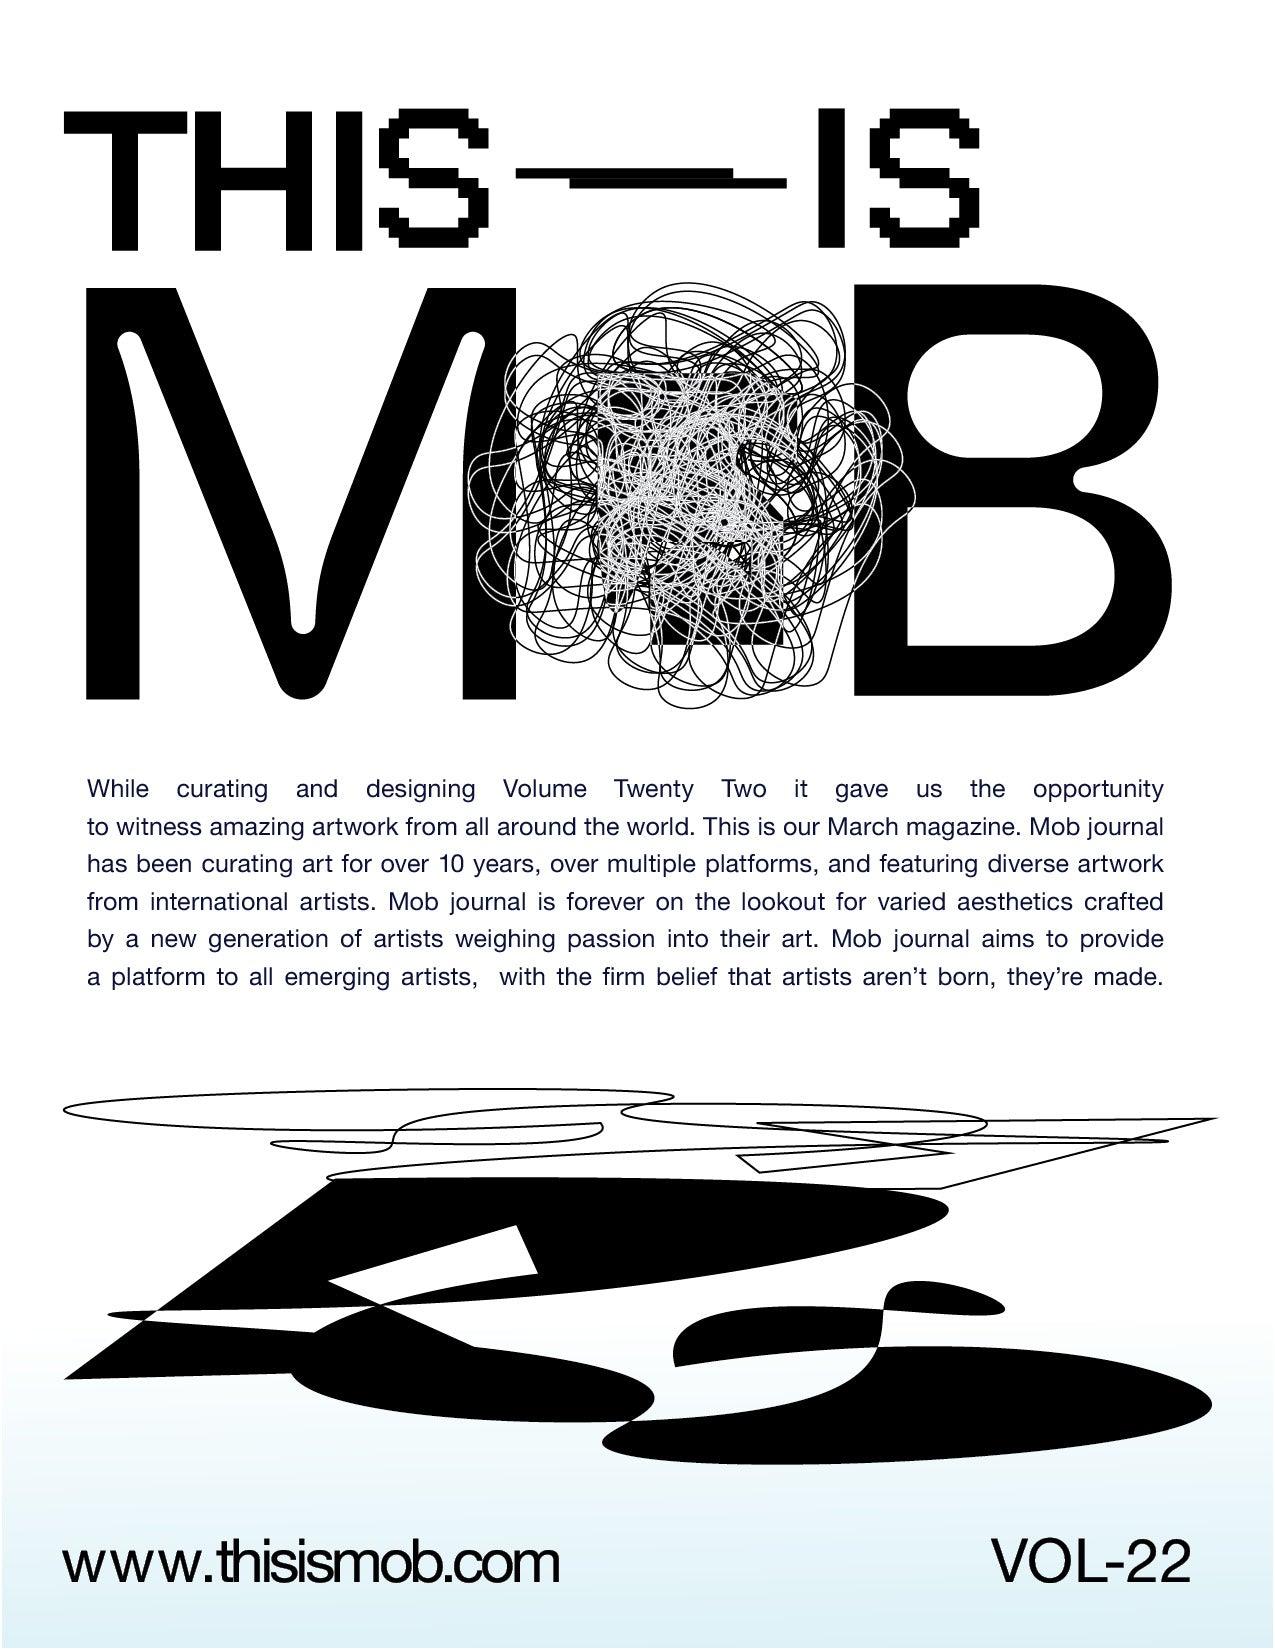 MOB JOURNAL | VOLUME TWENTY TWO | ISSUE #08 - Mob Journal